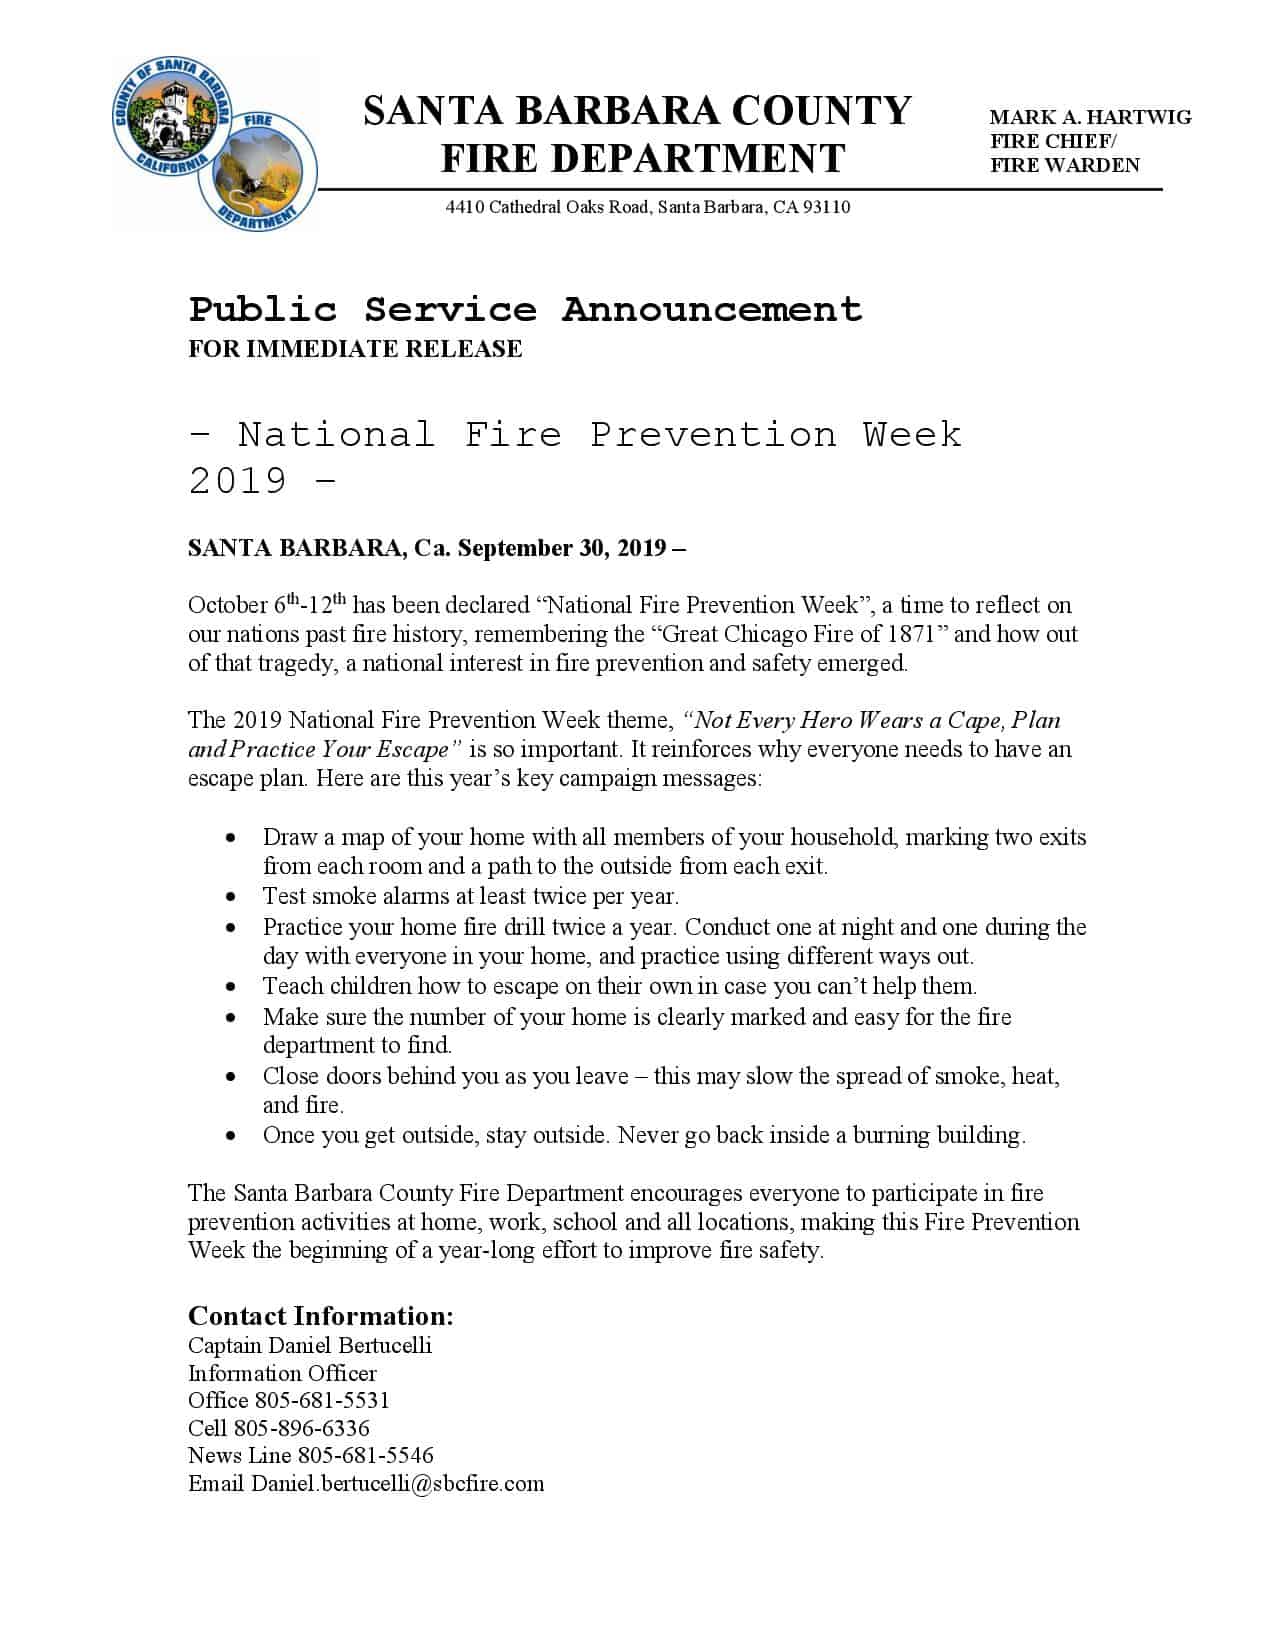 Fire Prevention Week 2019